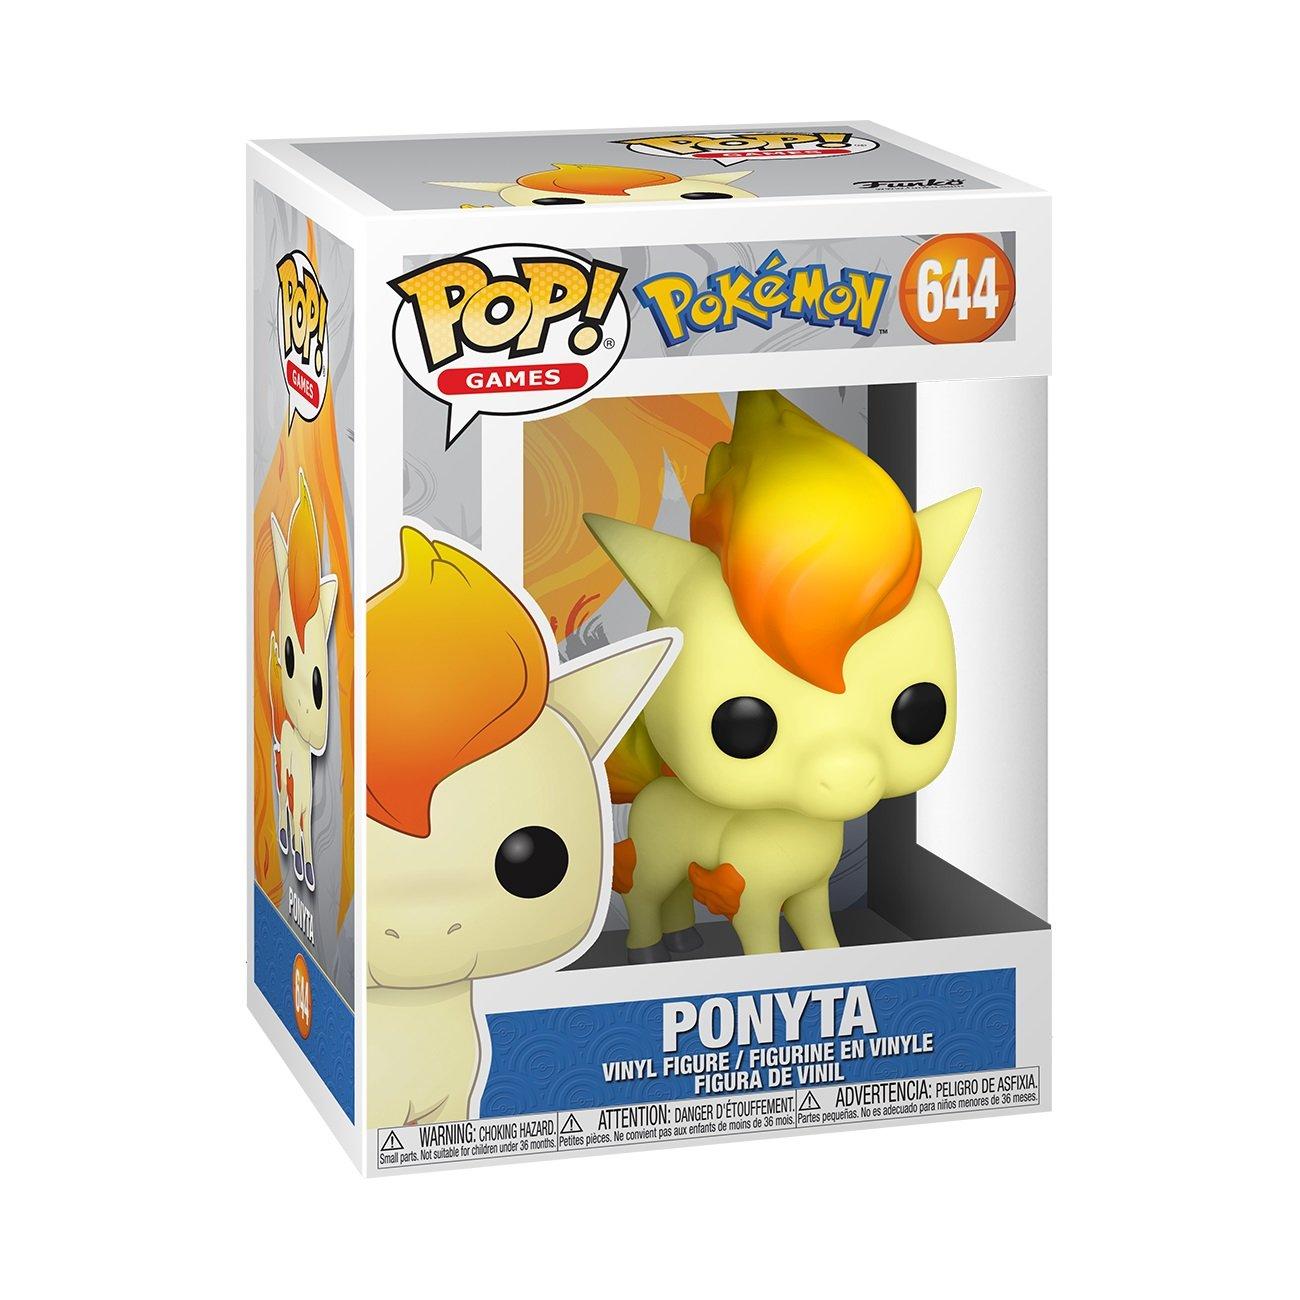 https://media.gamestop.com/i/gamestop/11104138_ALT01/Funko-POP-Games-Pokemon-Ponyta-3.75-in-Vinyl-Figure?$pdp$